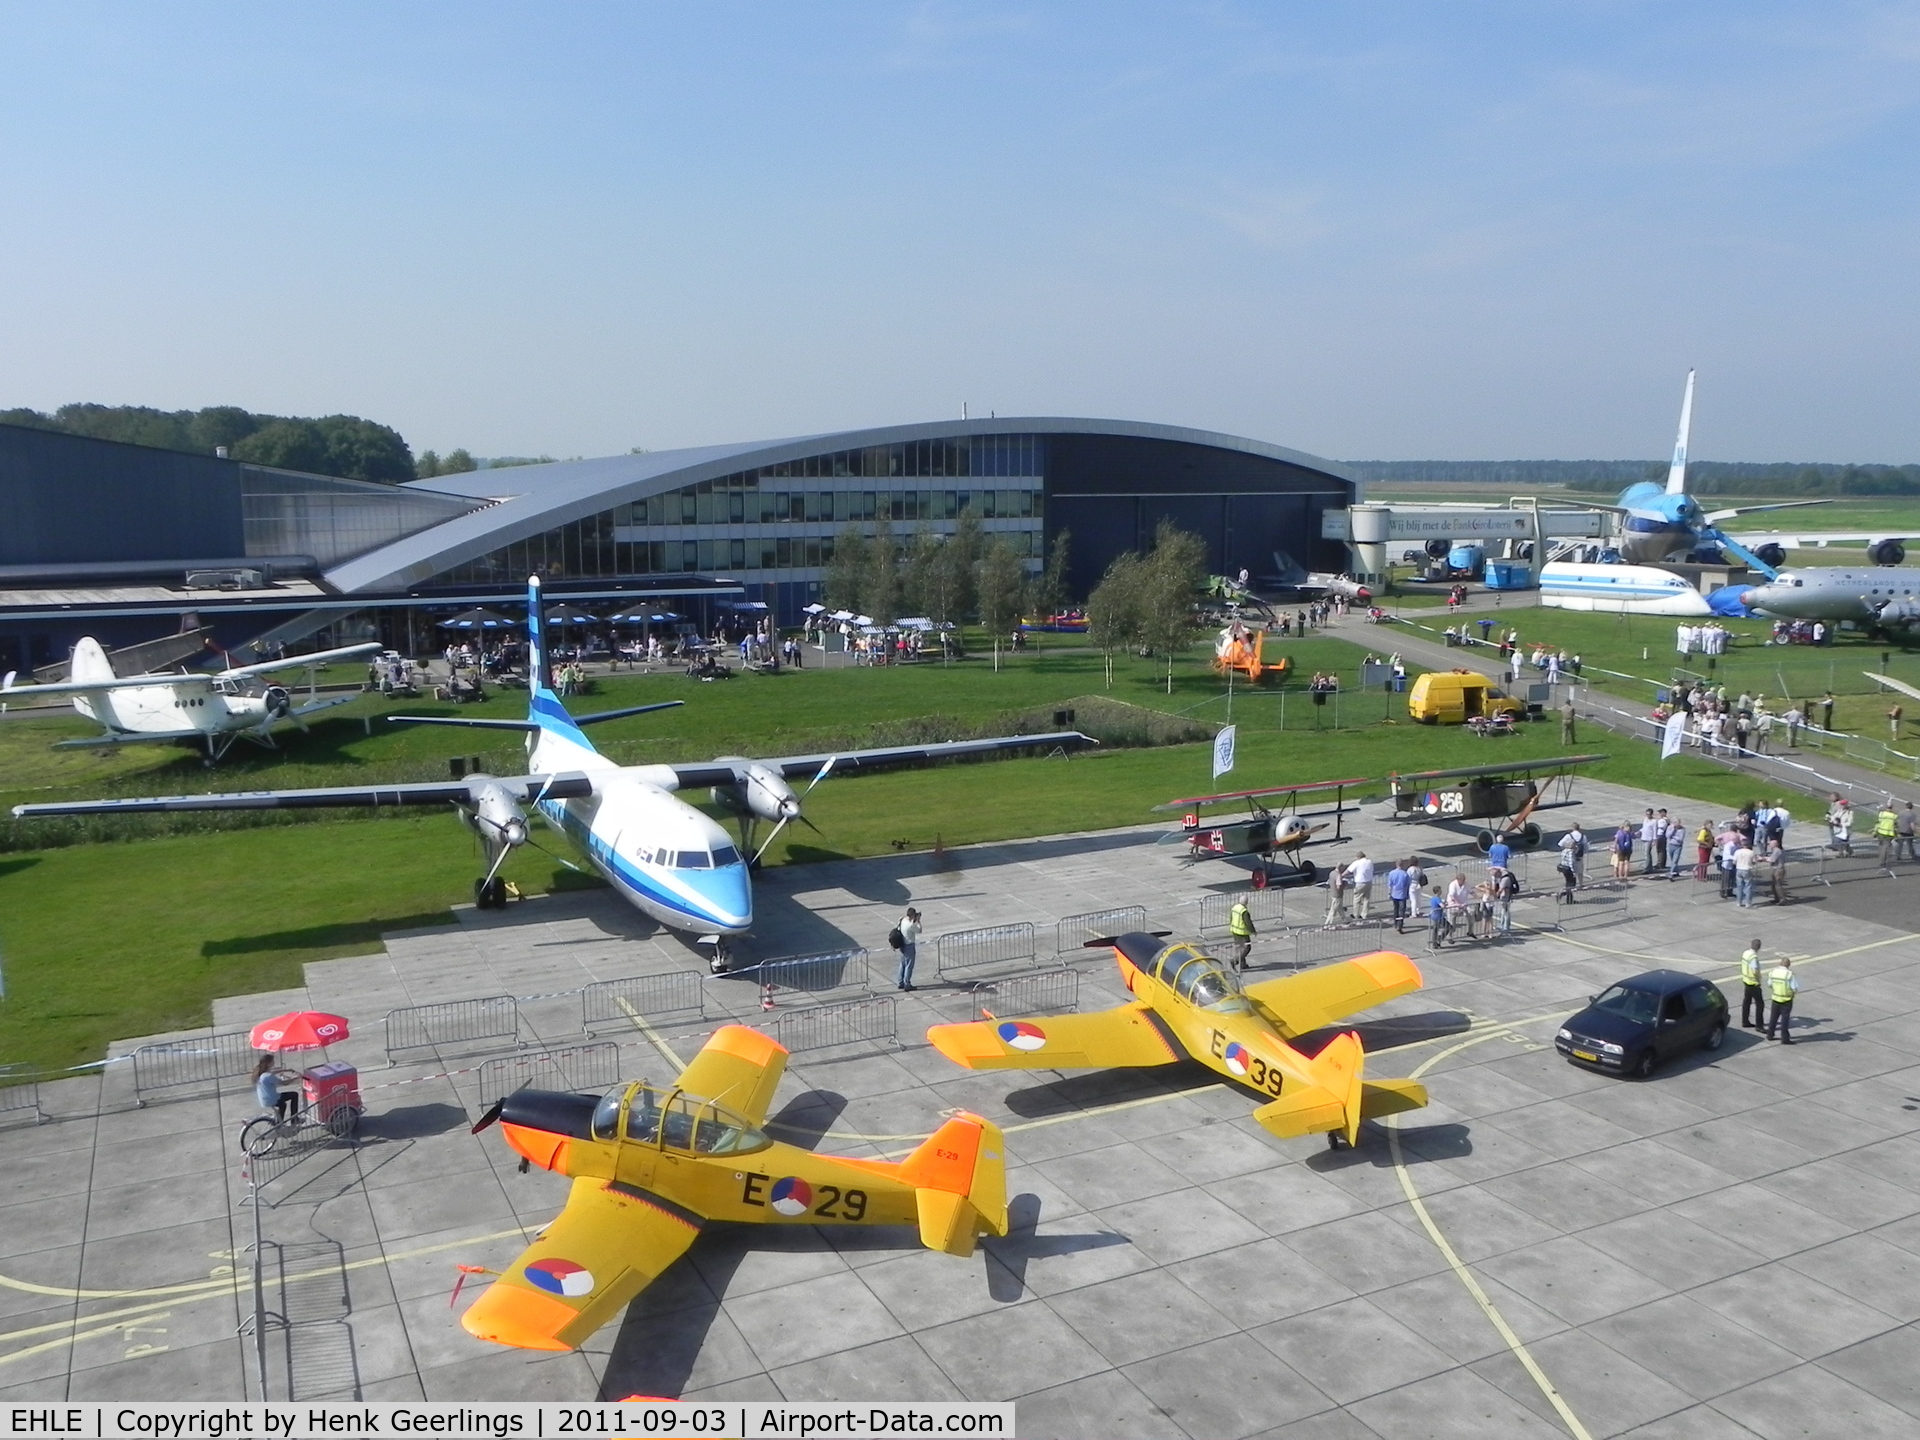 Lelystad Airport, Lelystad Netherlands (EHLE) - Aviodrome Aviation Museum. Special celebration for Fokker Centennial.

100 years Fokker